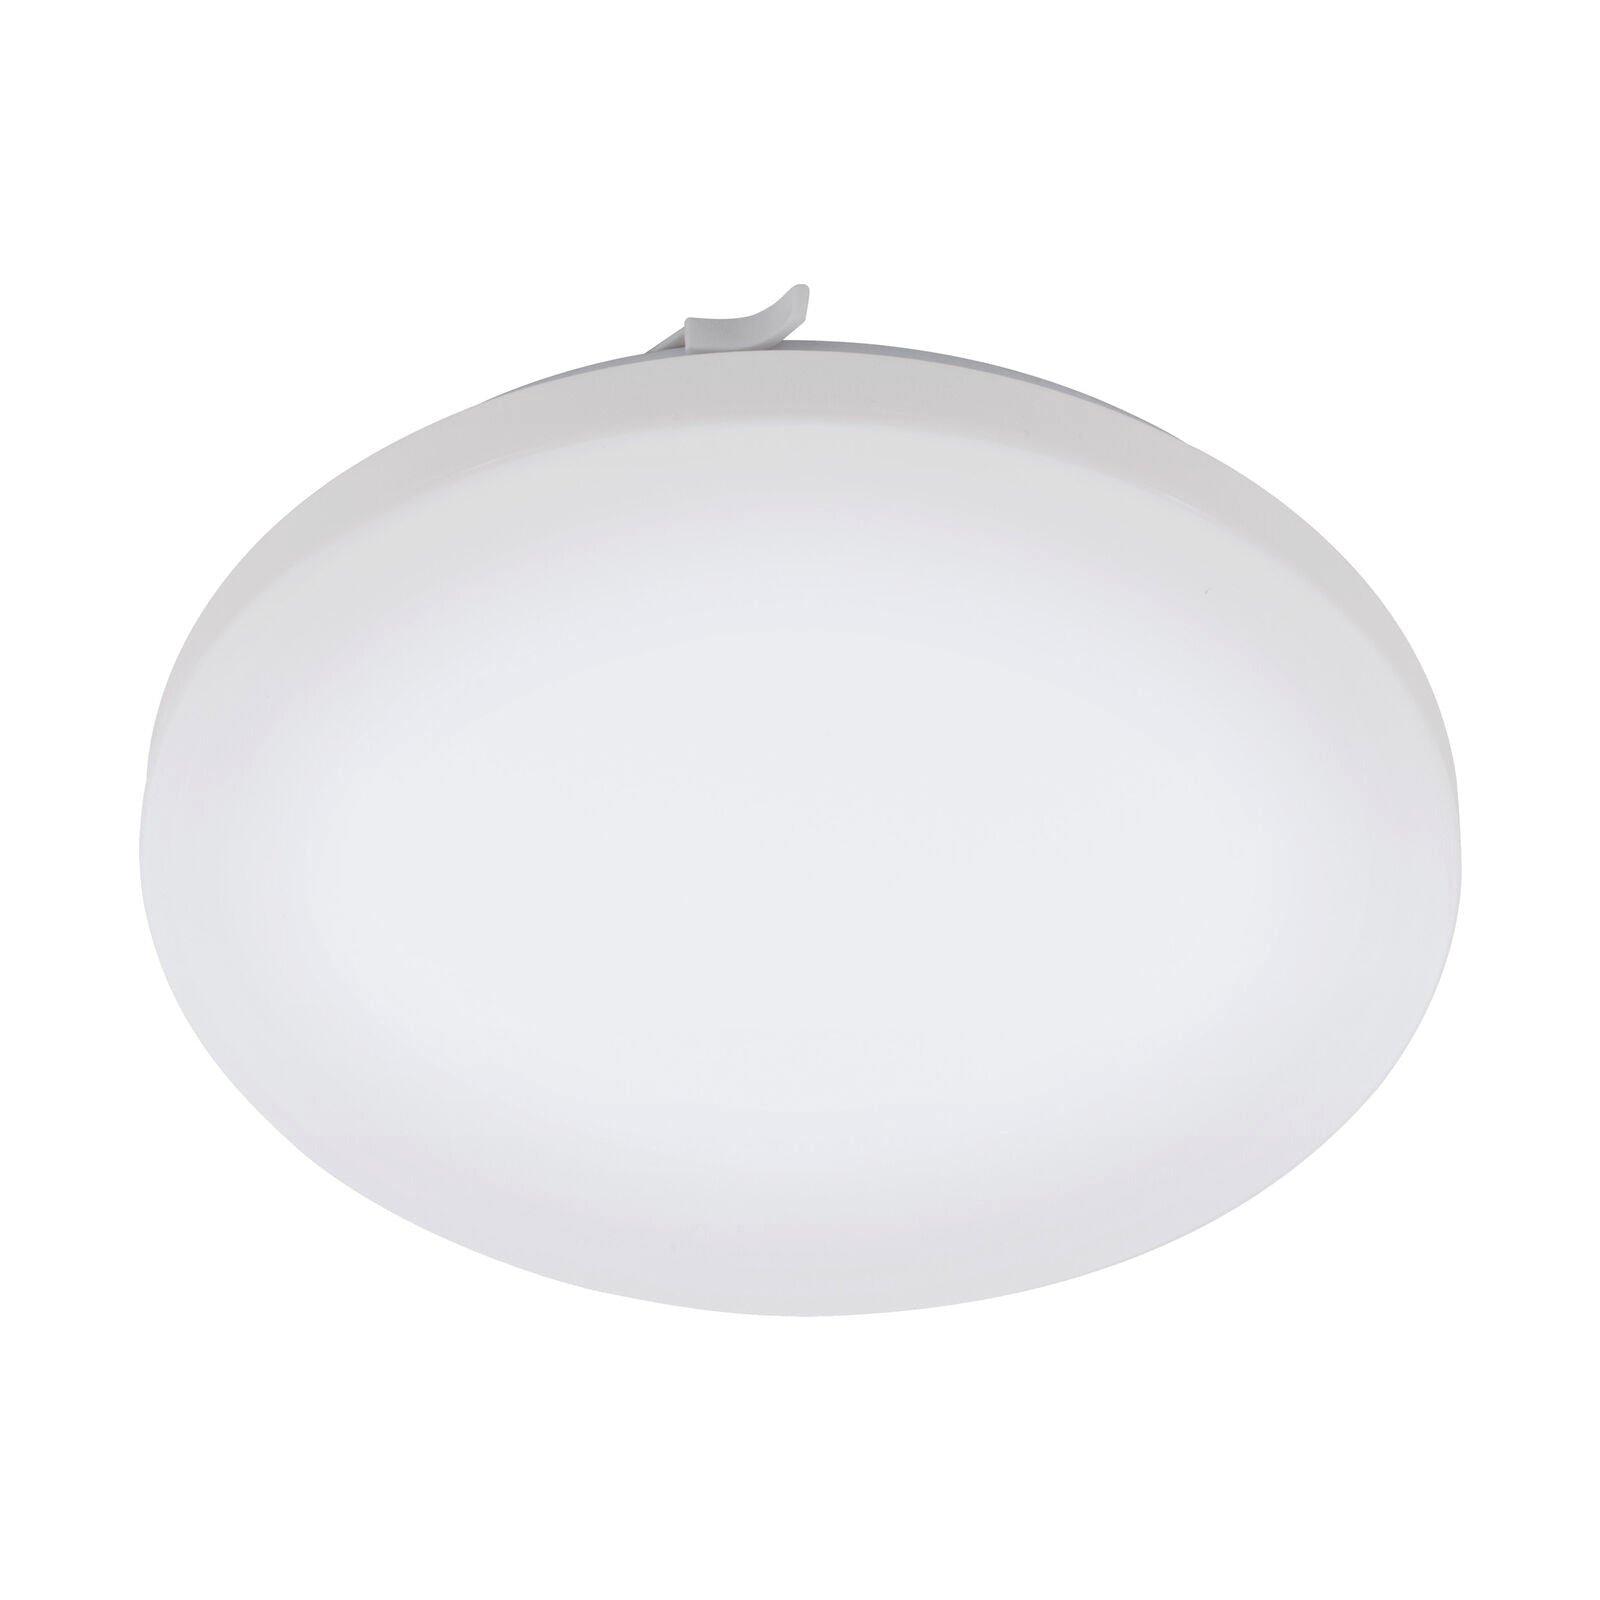 Wall Flush Ceiling Light Colour White Shade White Plastic Bulb LED 17.3W Incl